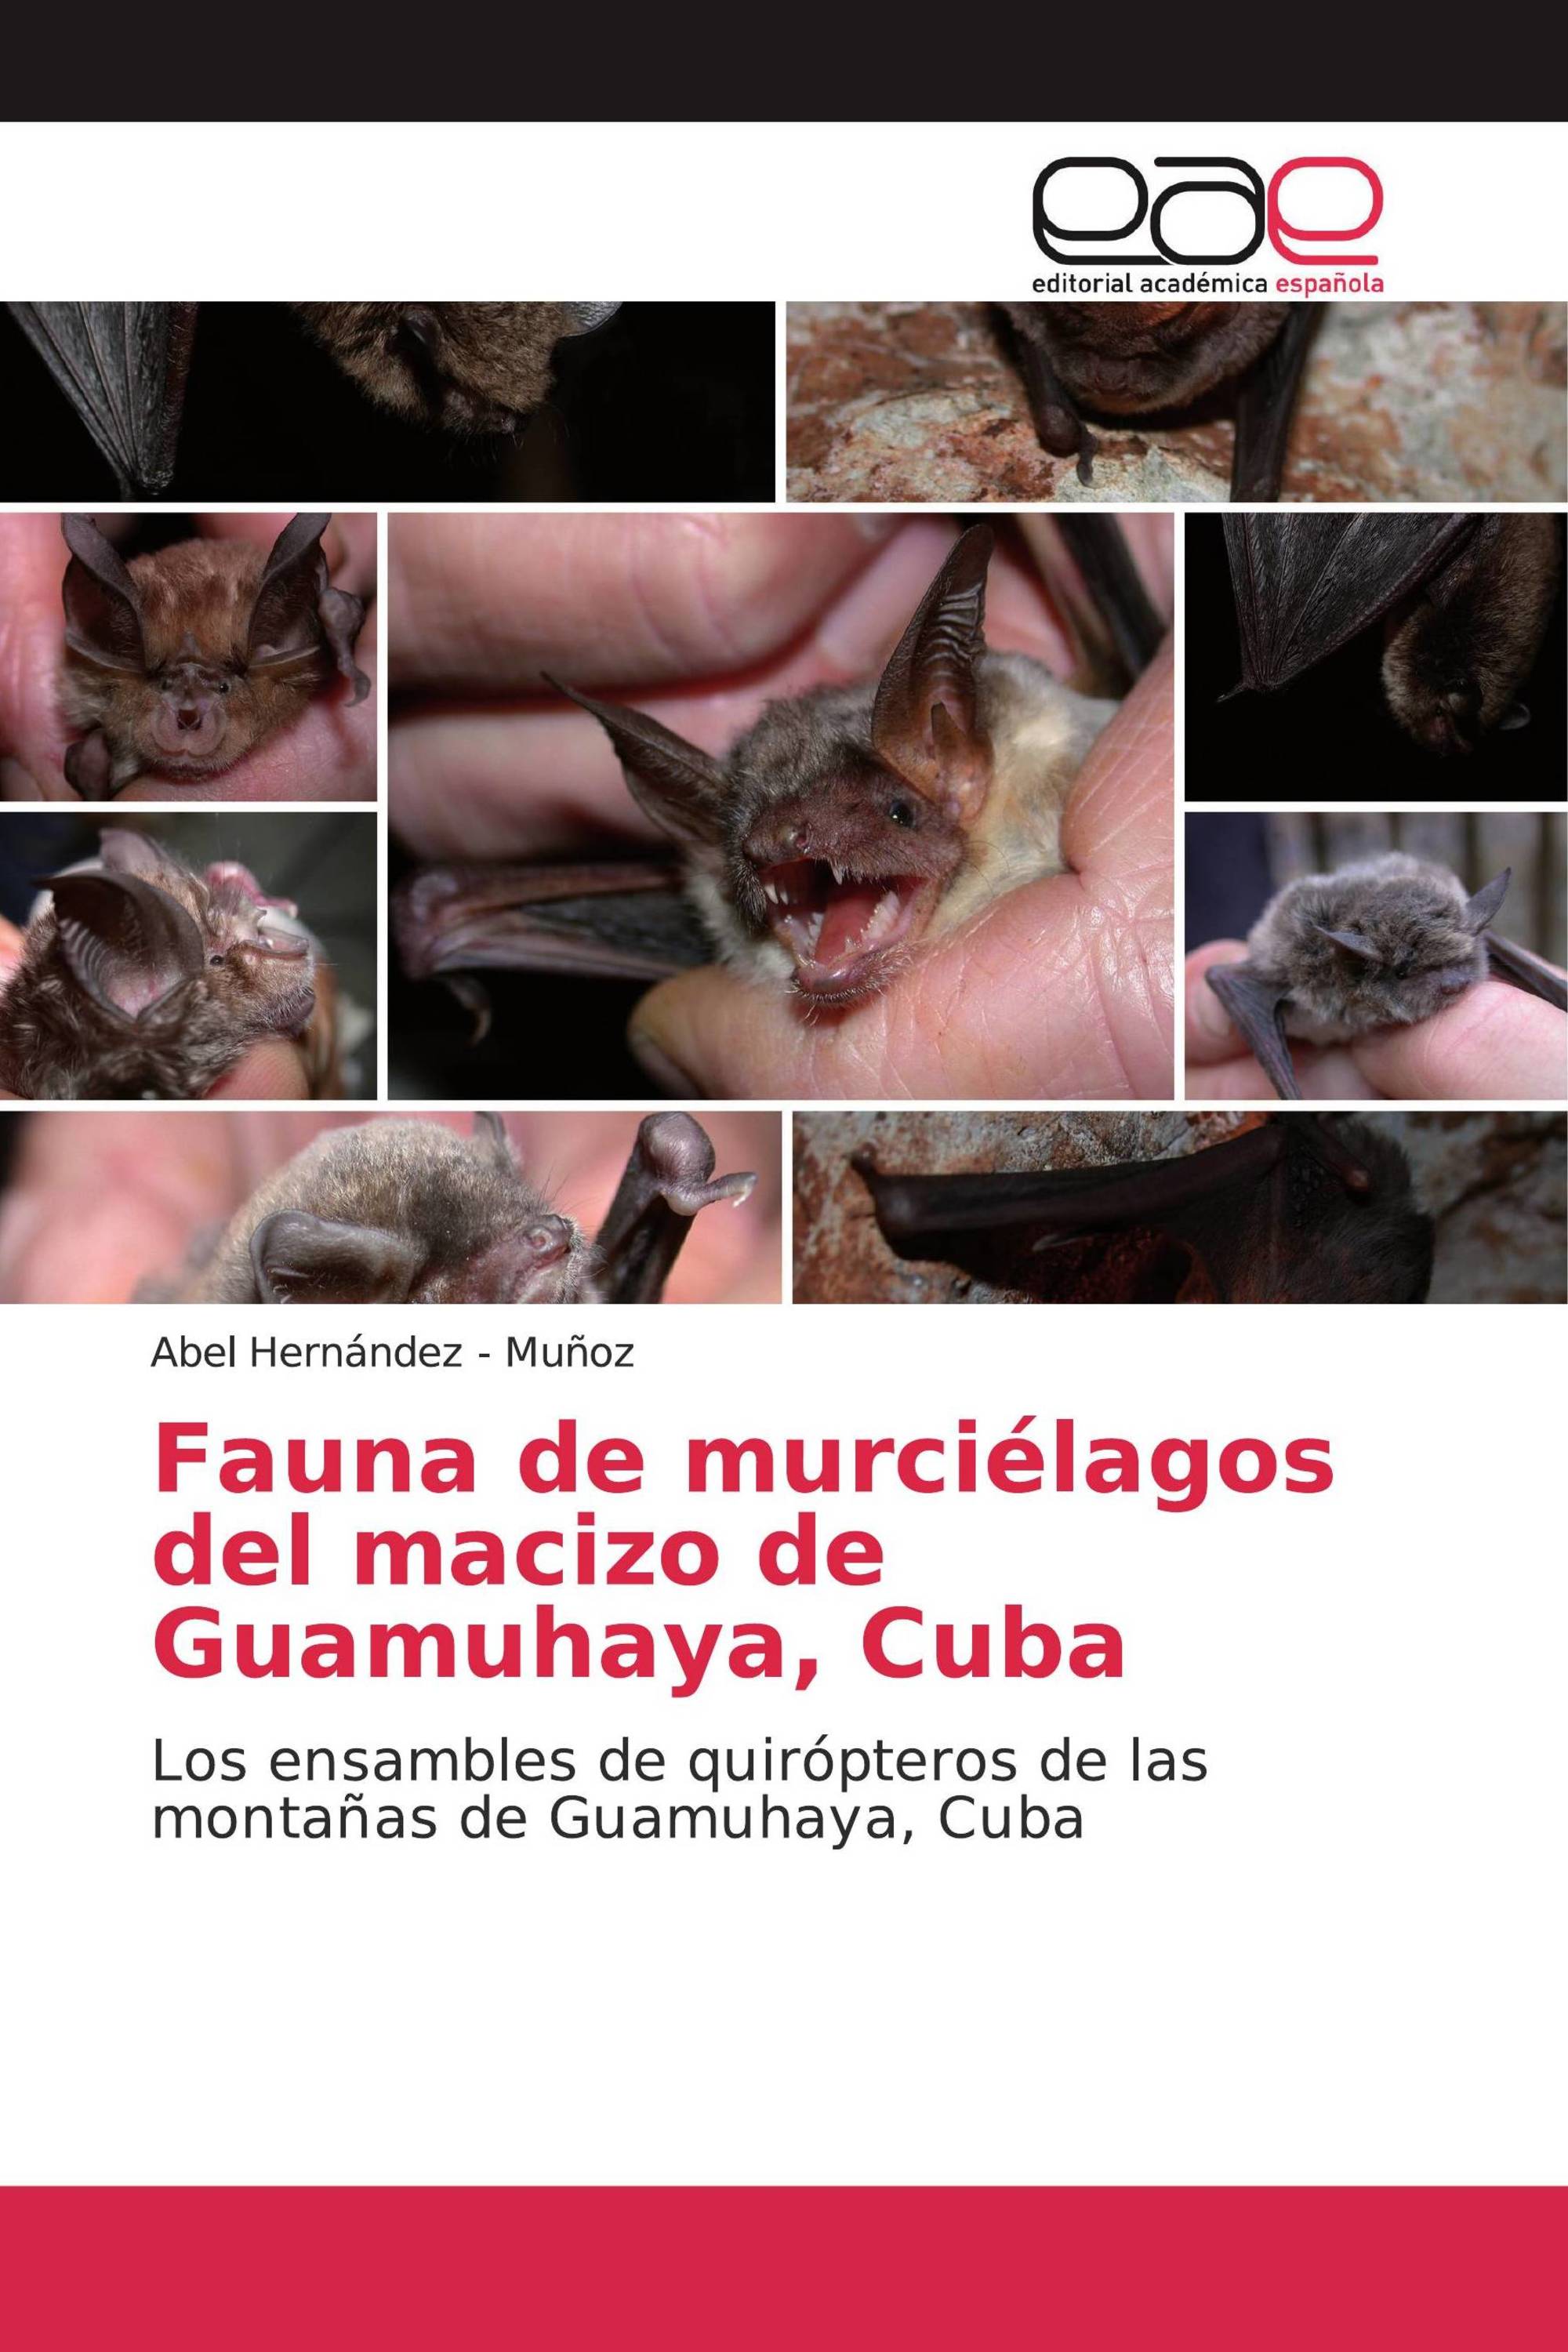 Fauna de murciélagos del macizo de Guamuhaya, Cuba